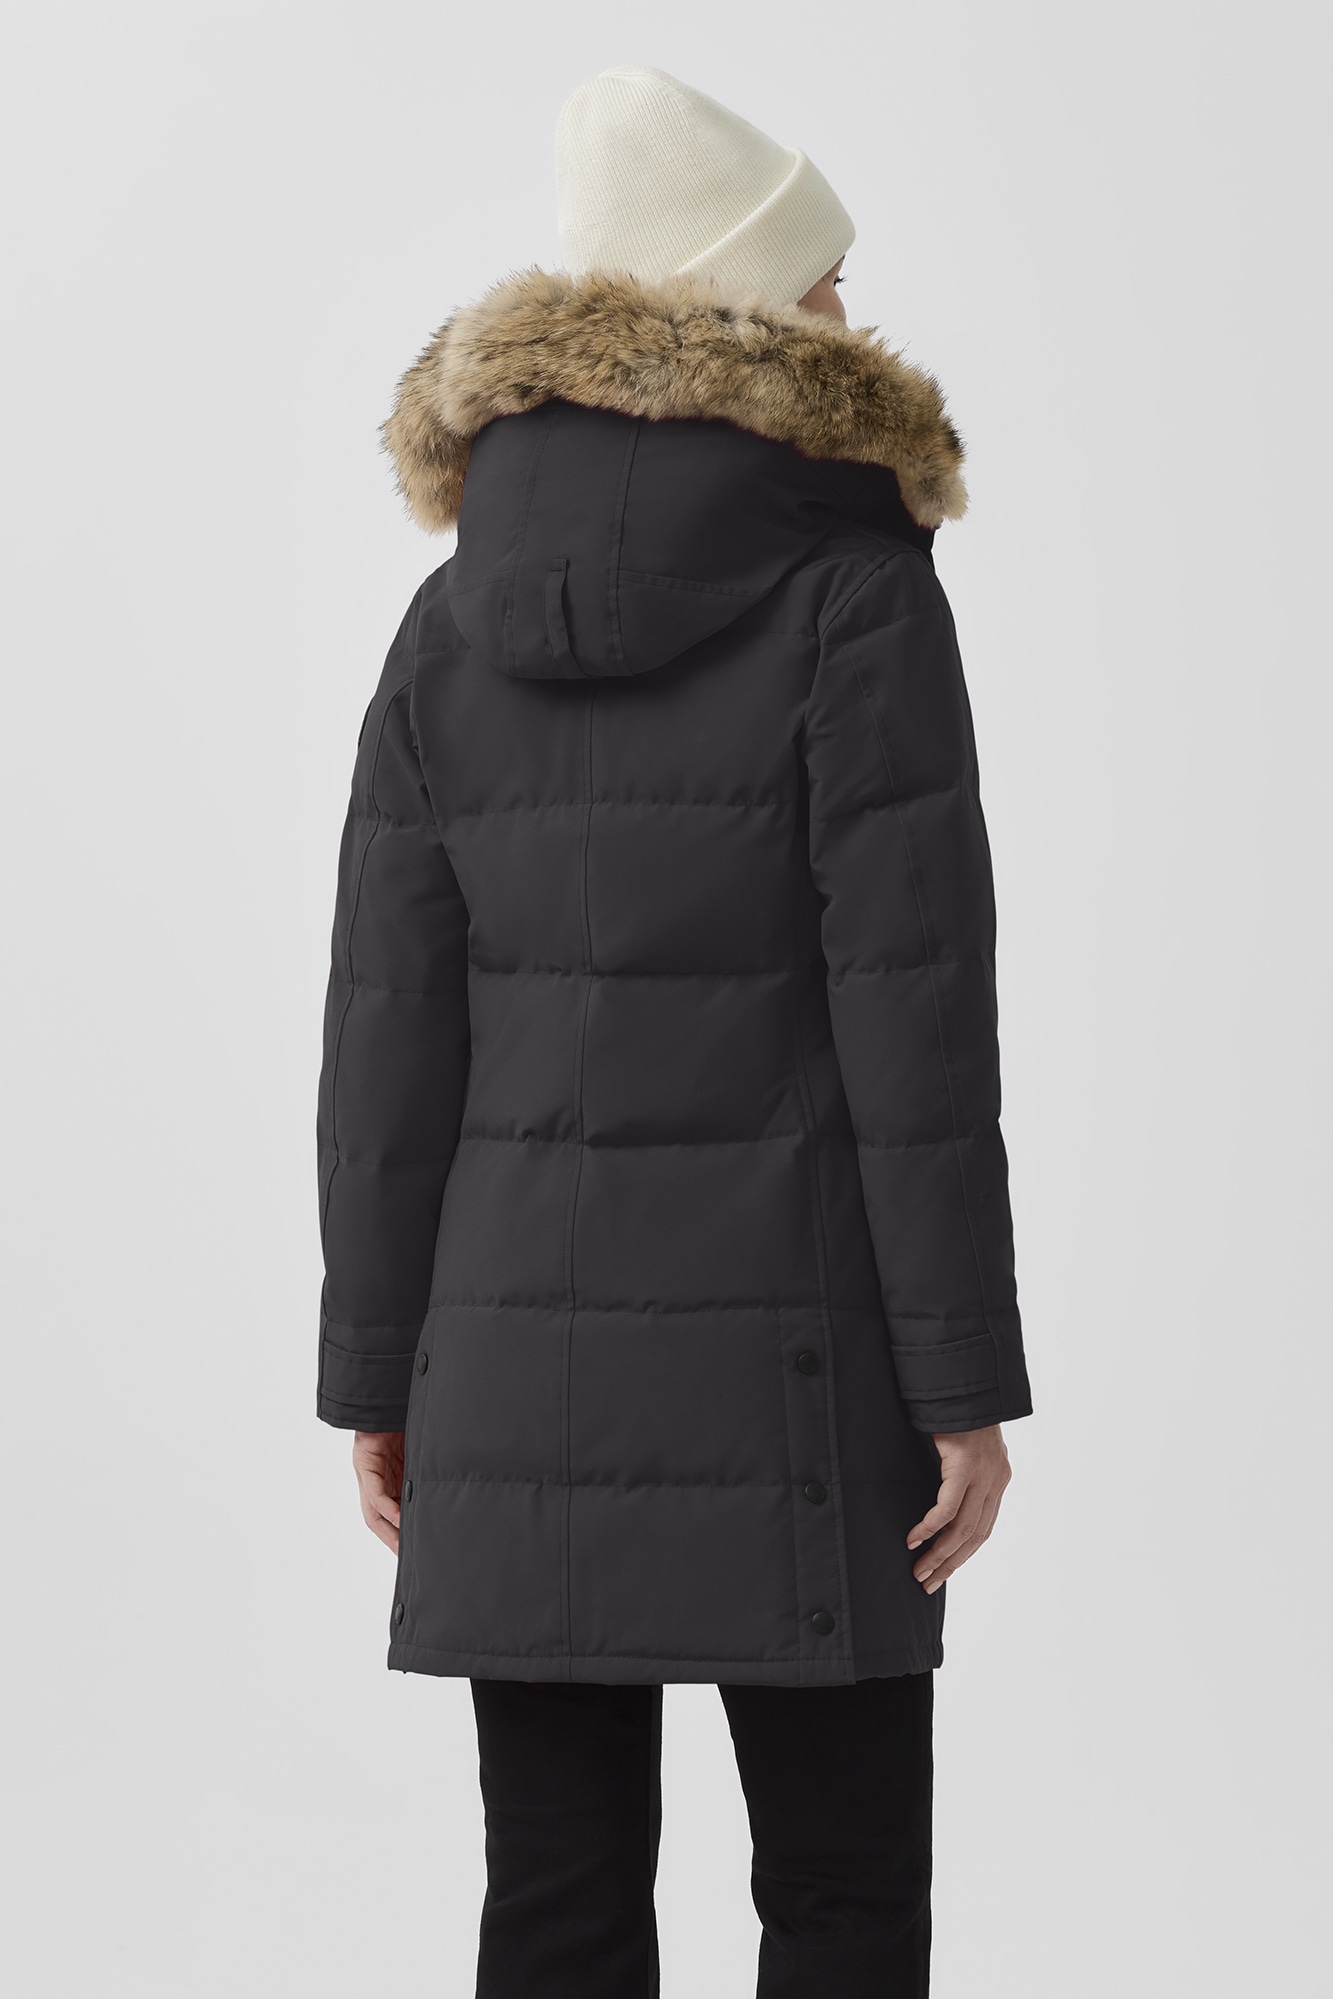 canada goose - women's shelburne parka - winter jacket